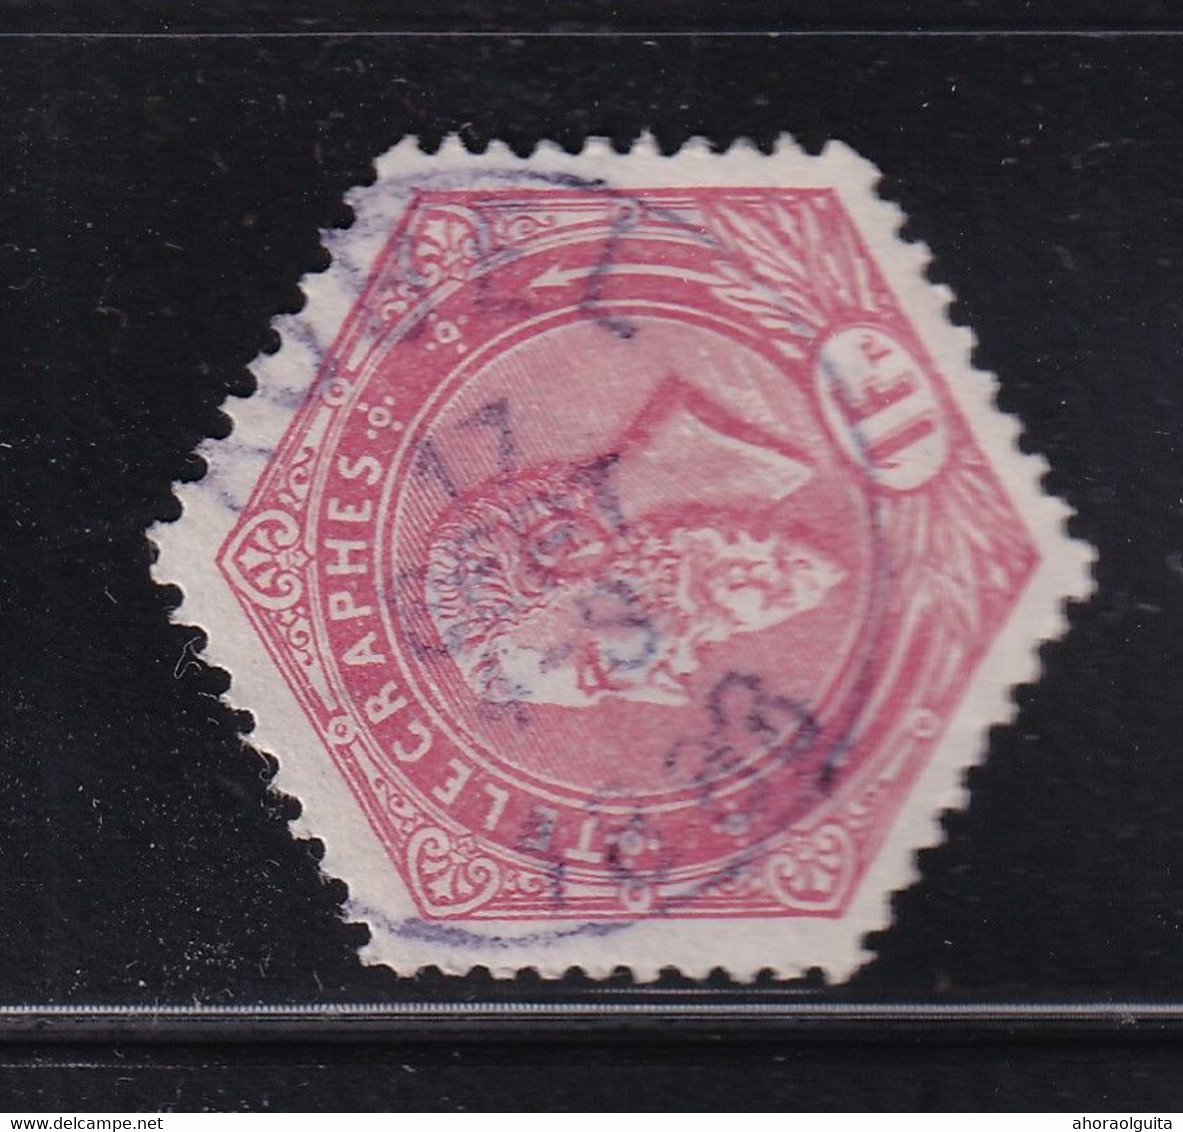 DDDD 411  --  Timbre Télégraphe Cachet Postal Simple Cercle AUBEL 1888 - Francobolli Telegrafici [TG]